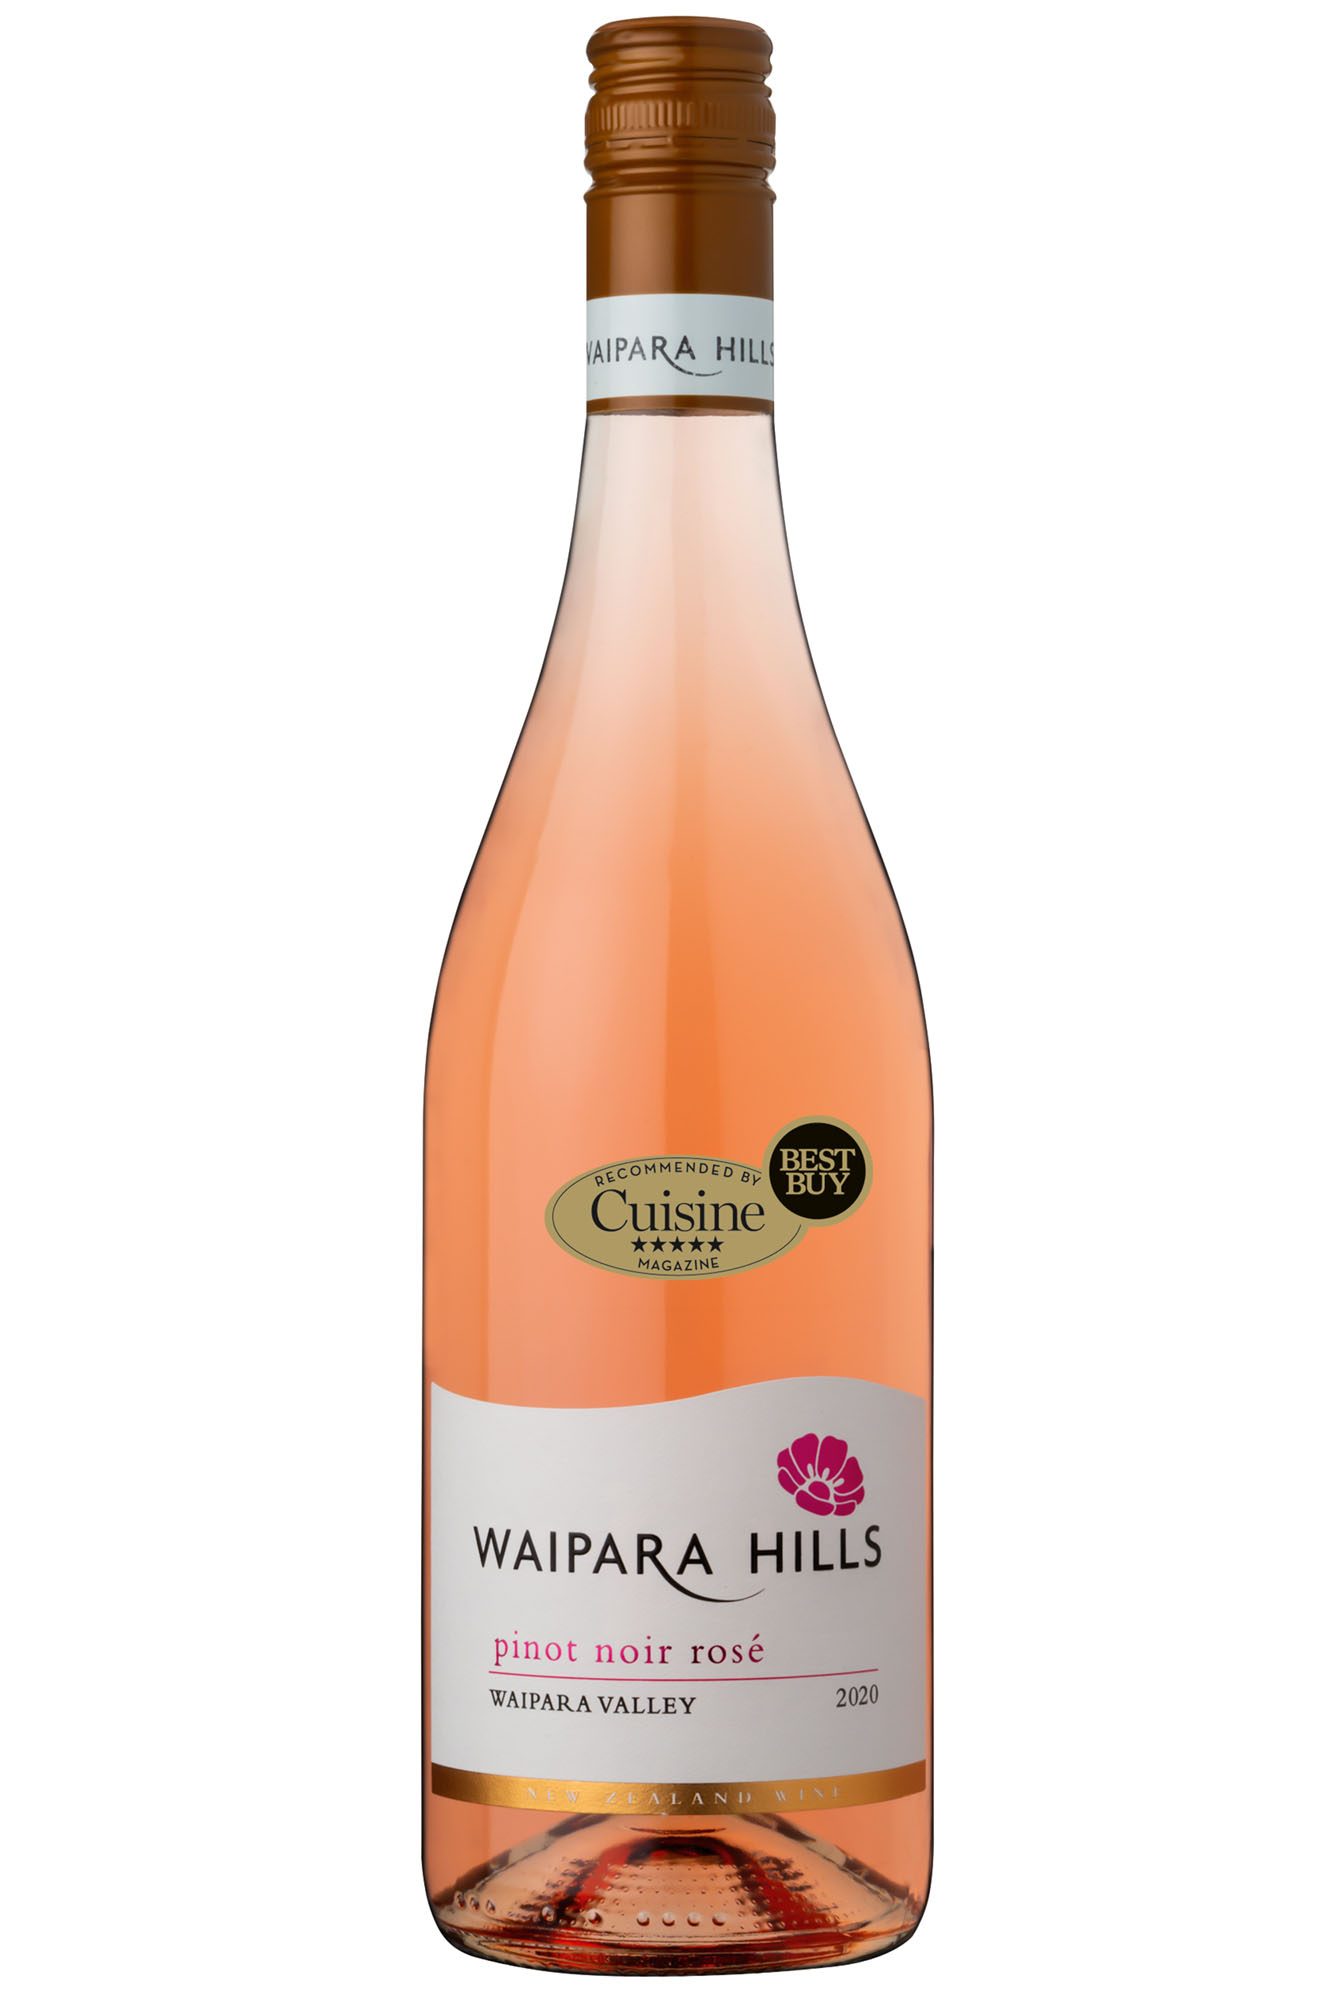 Waipara Hills Waipara Valley Pinot Noir Rosé 2020